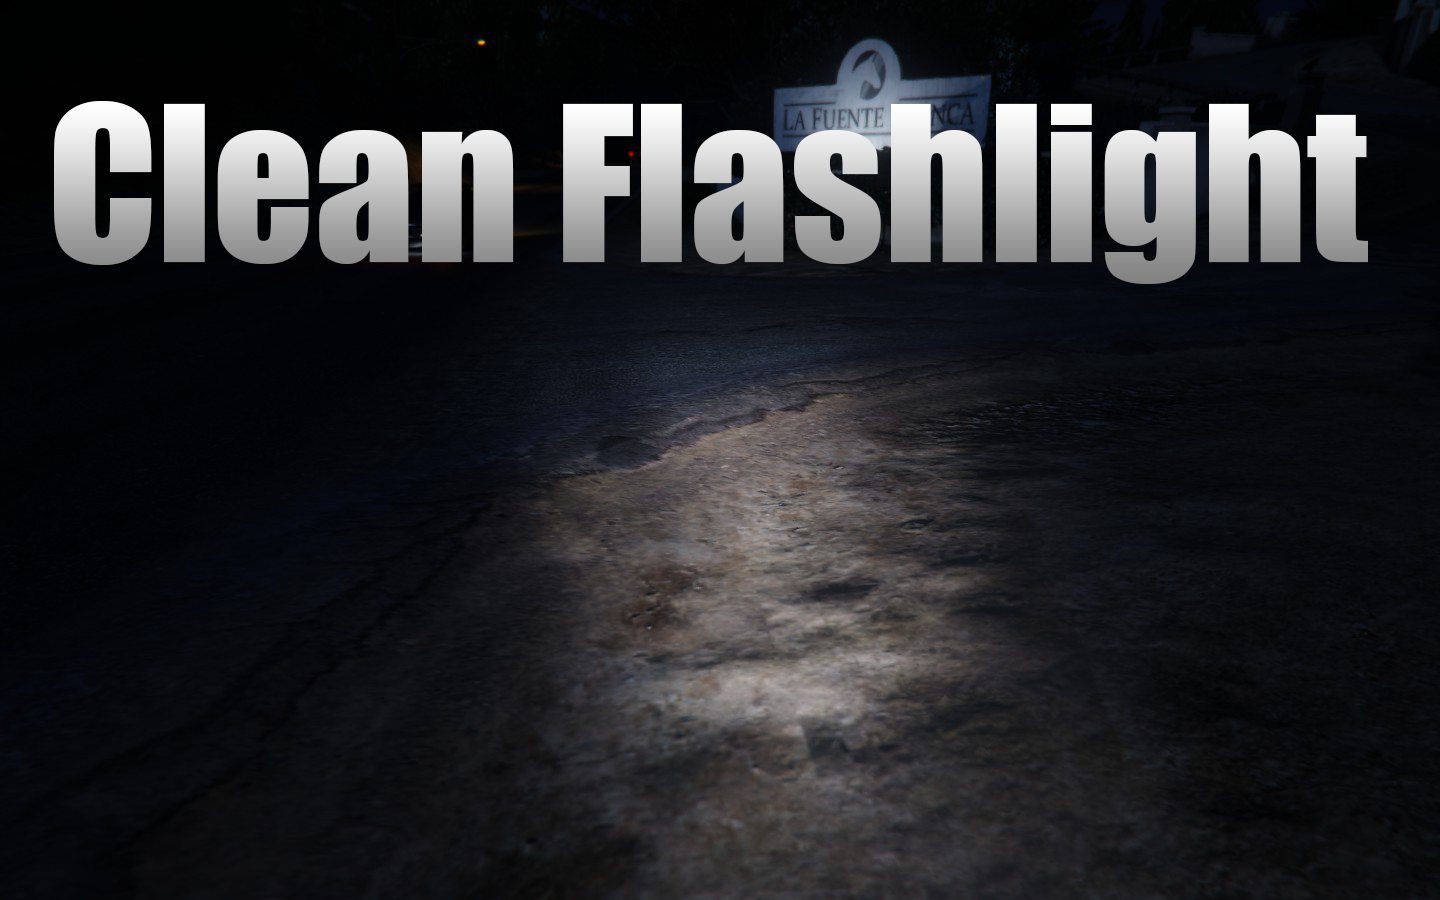 flashlight texture map